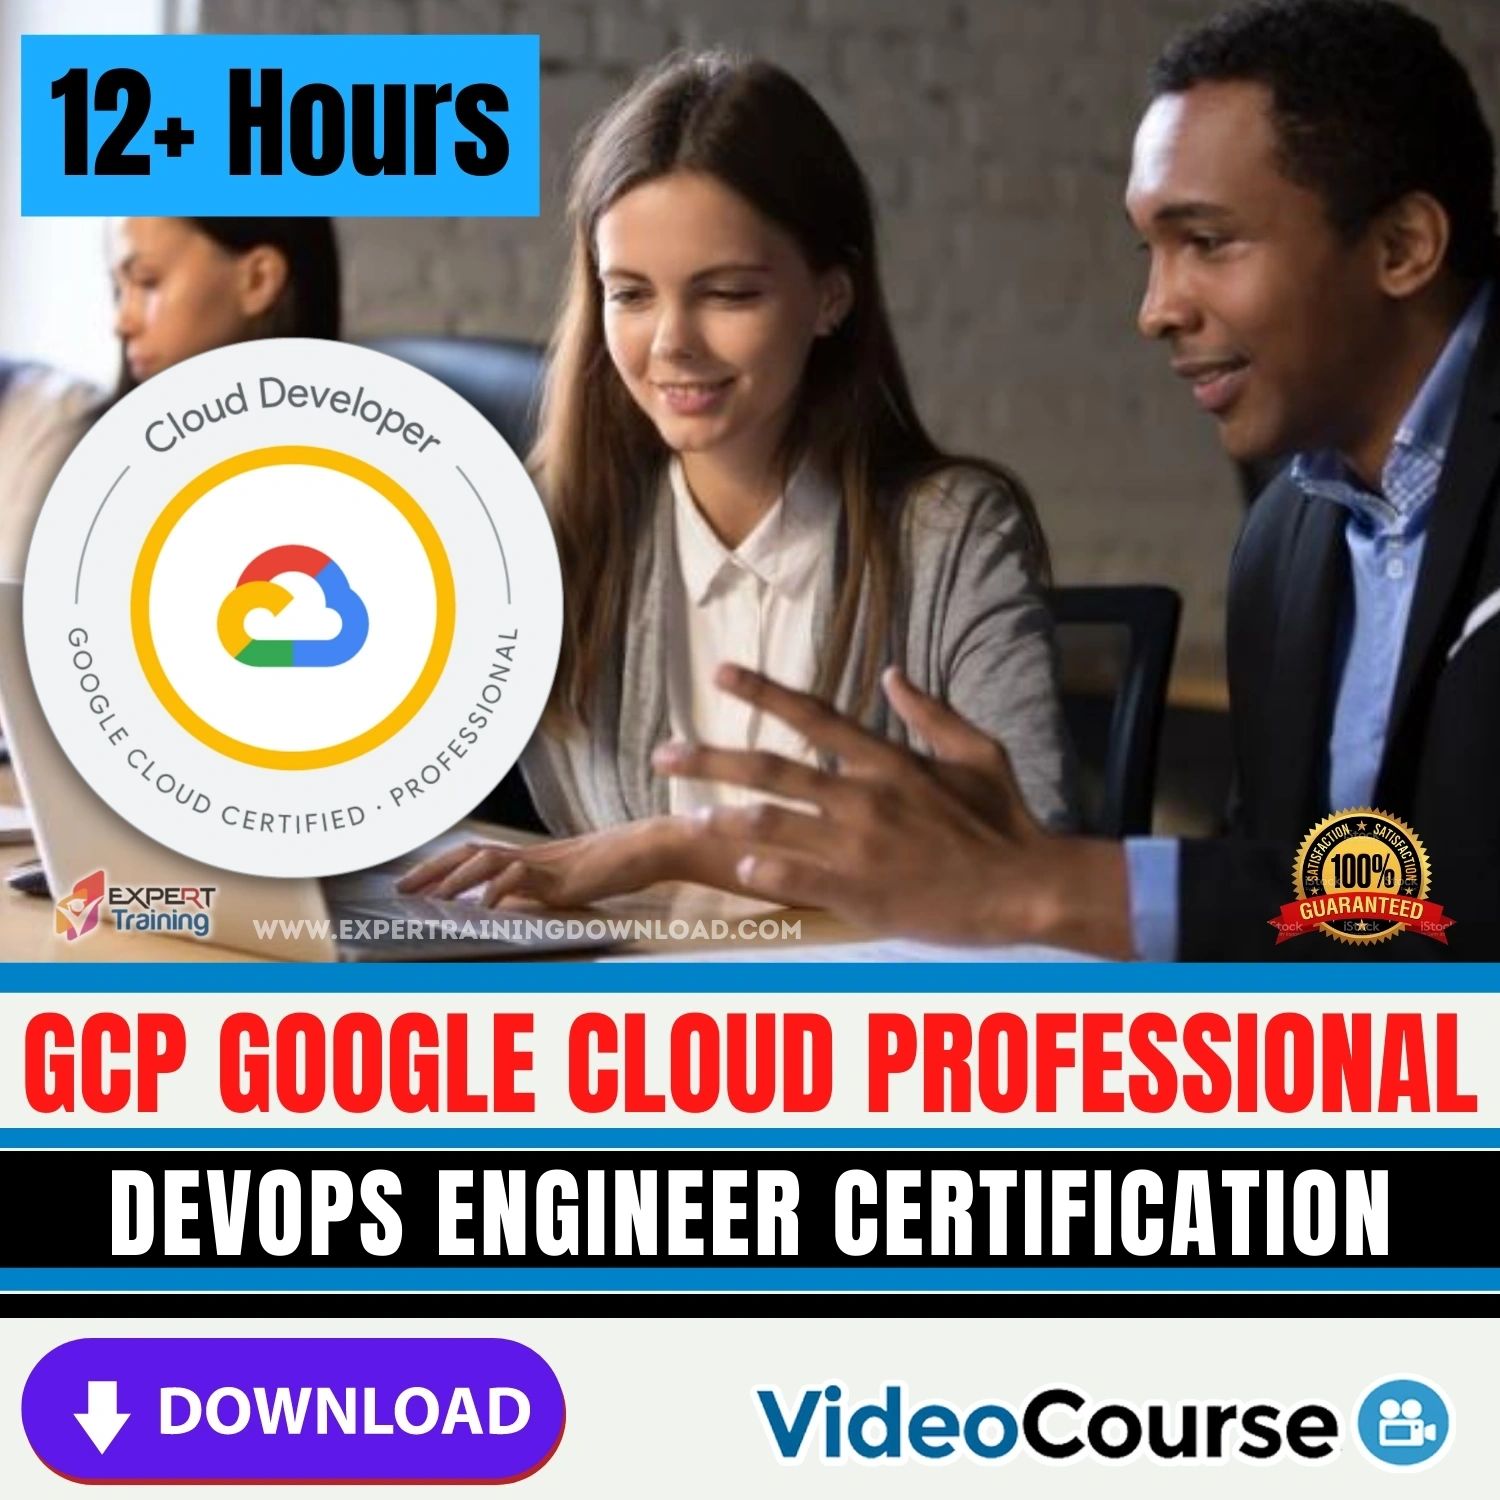 GCP Google Cloud Professional DevOps Engineer Certification